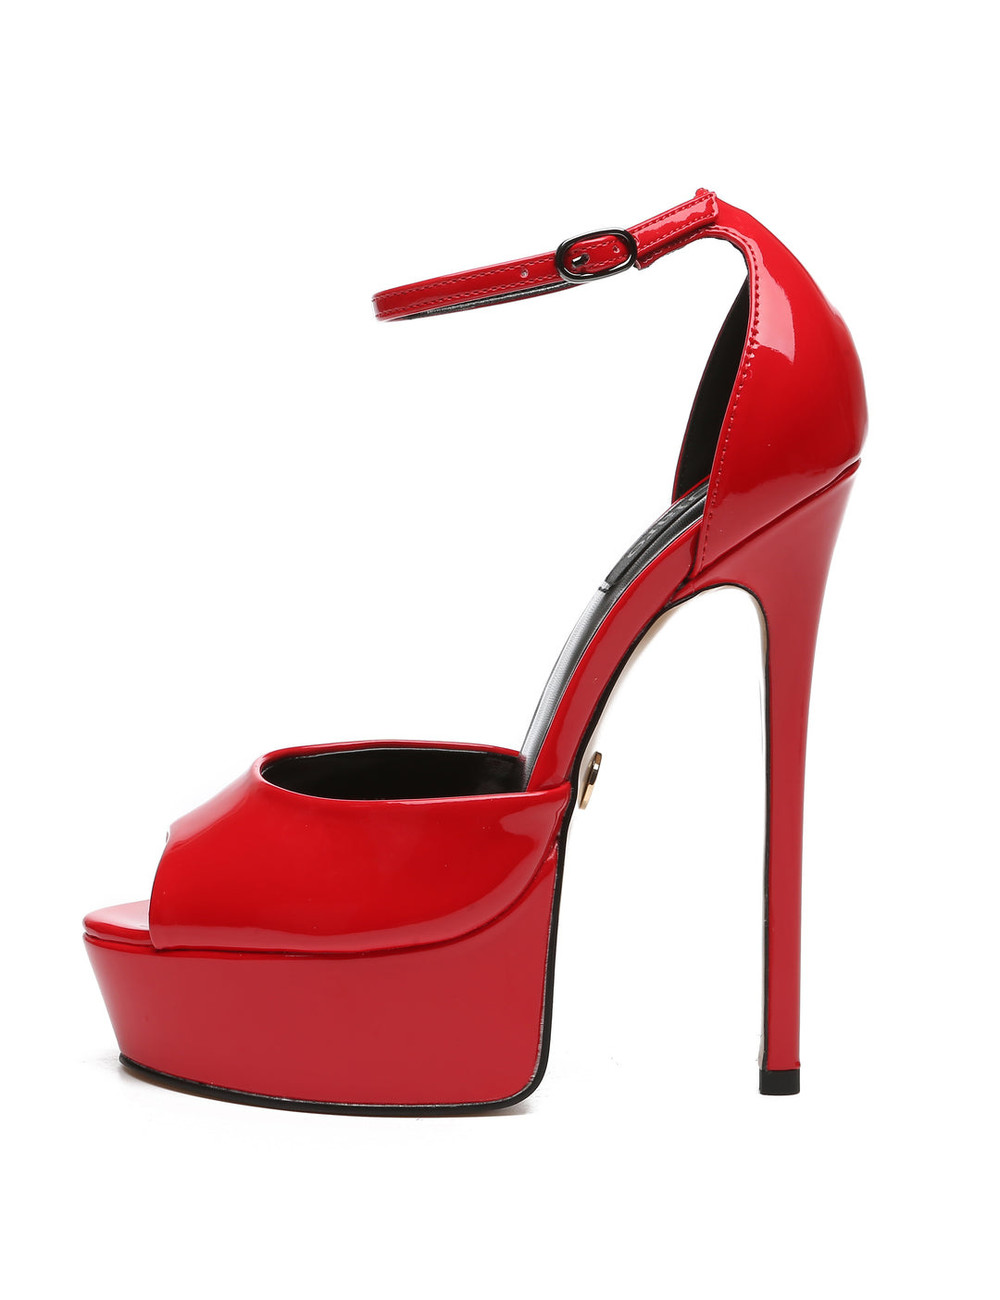 Giaro KYOTO RED SHINY - Giaro High Heels | Official store - All Vegan ...